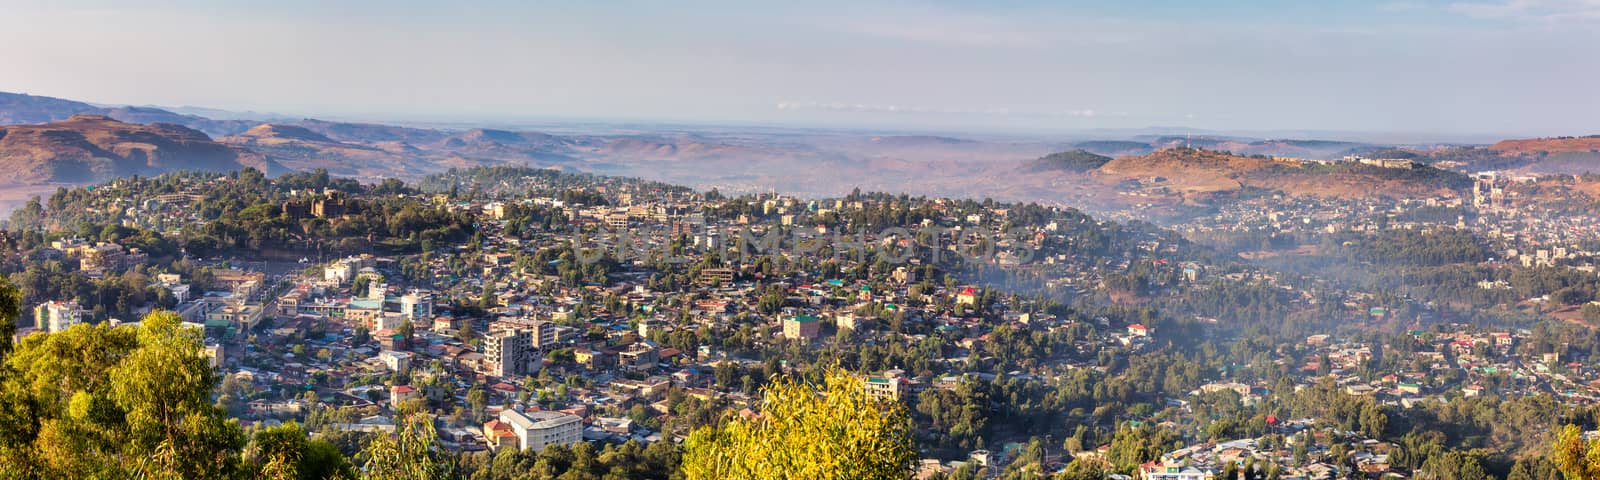 Gondar city with Fasil Ghebbi, Ethiopia by artush